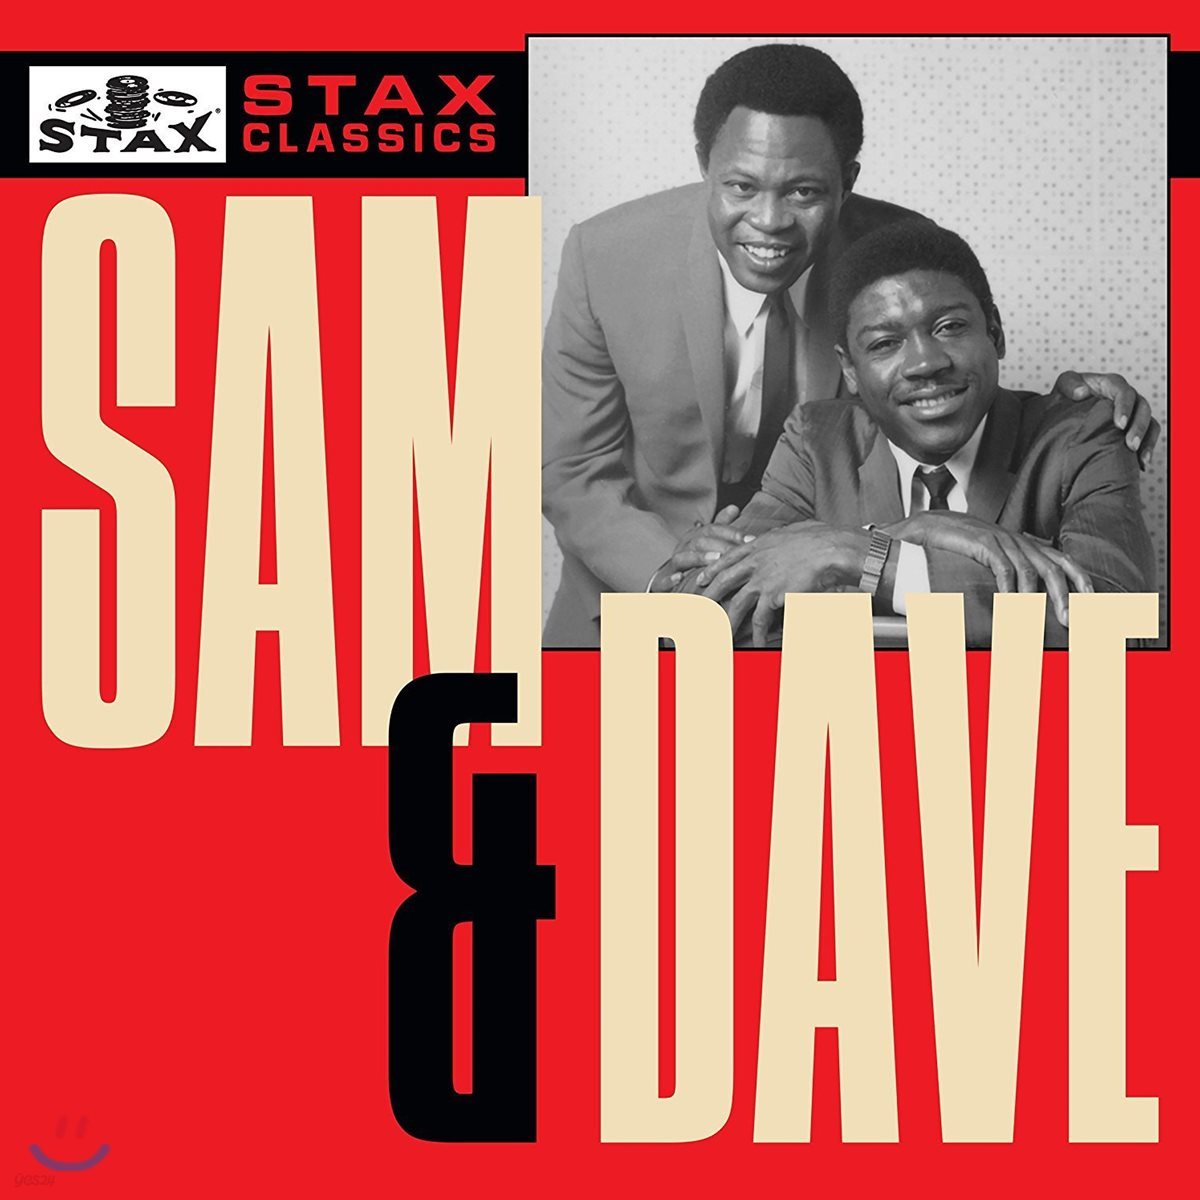 Sam &amp; Dave (샘 앤 데이브) - Stax Classics (스택스 클래식스)